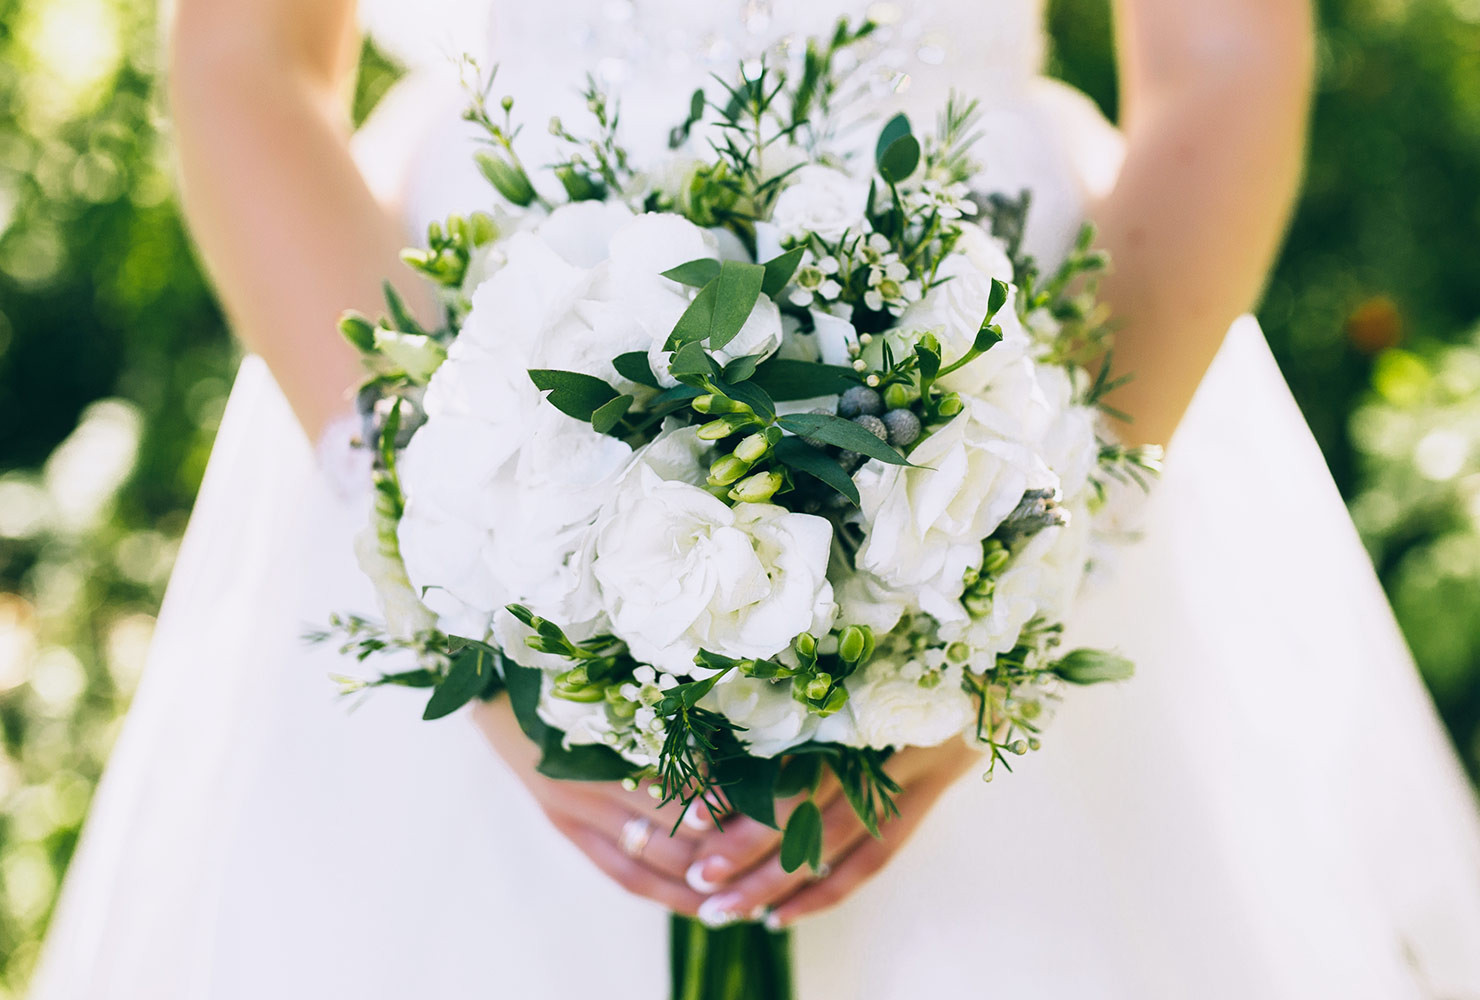 Wedding Flowers Ideas
 The 15 Most Popular Wedding Flowers In 2019